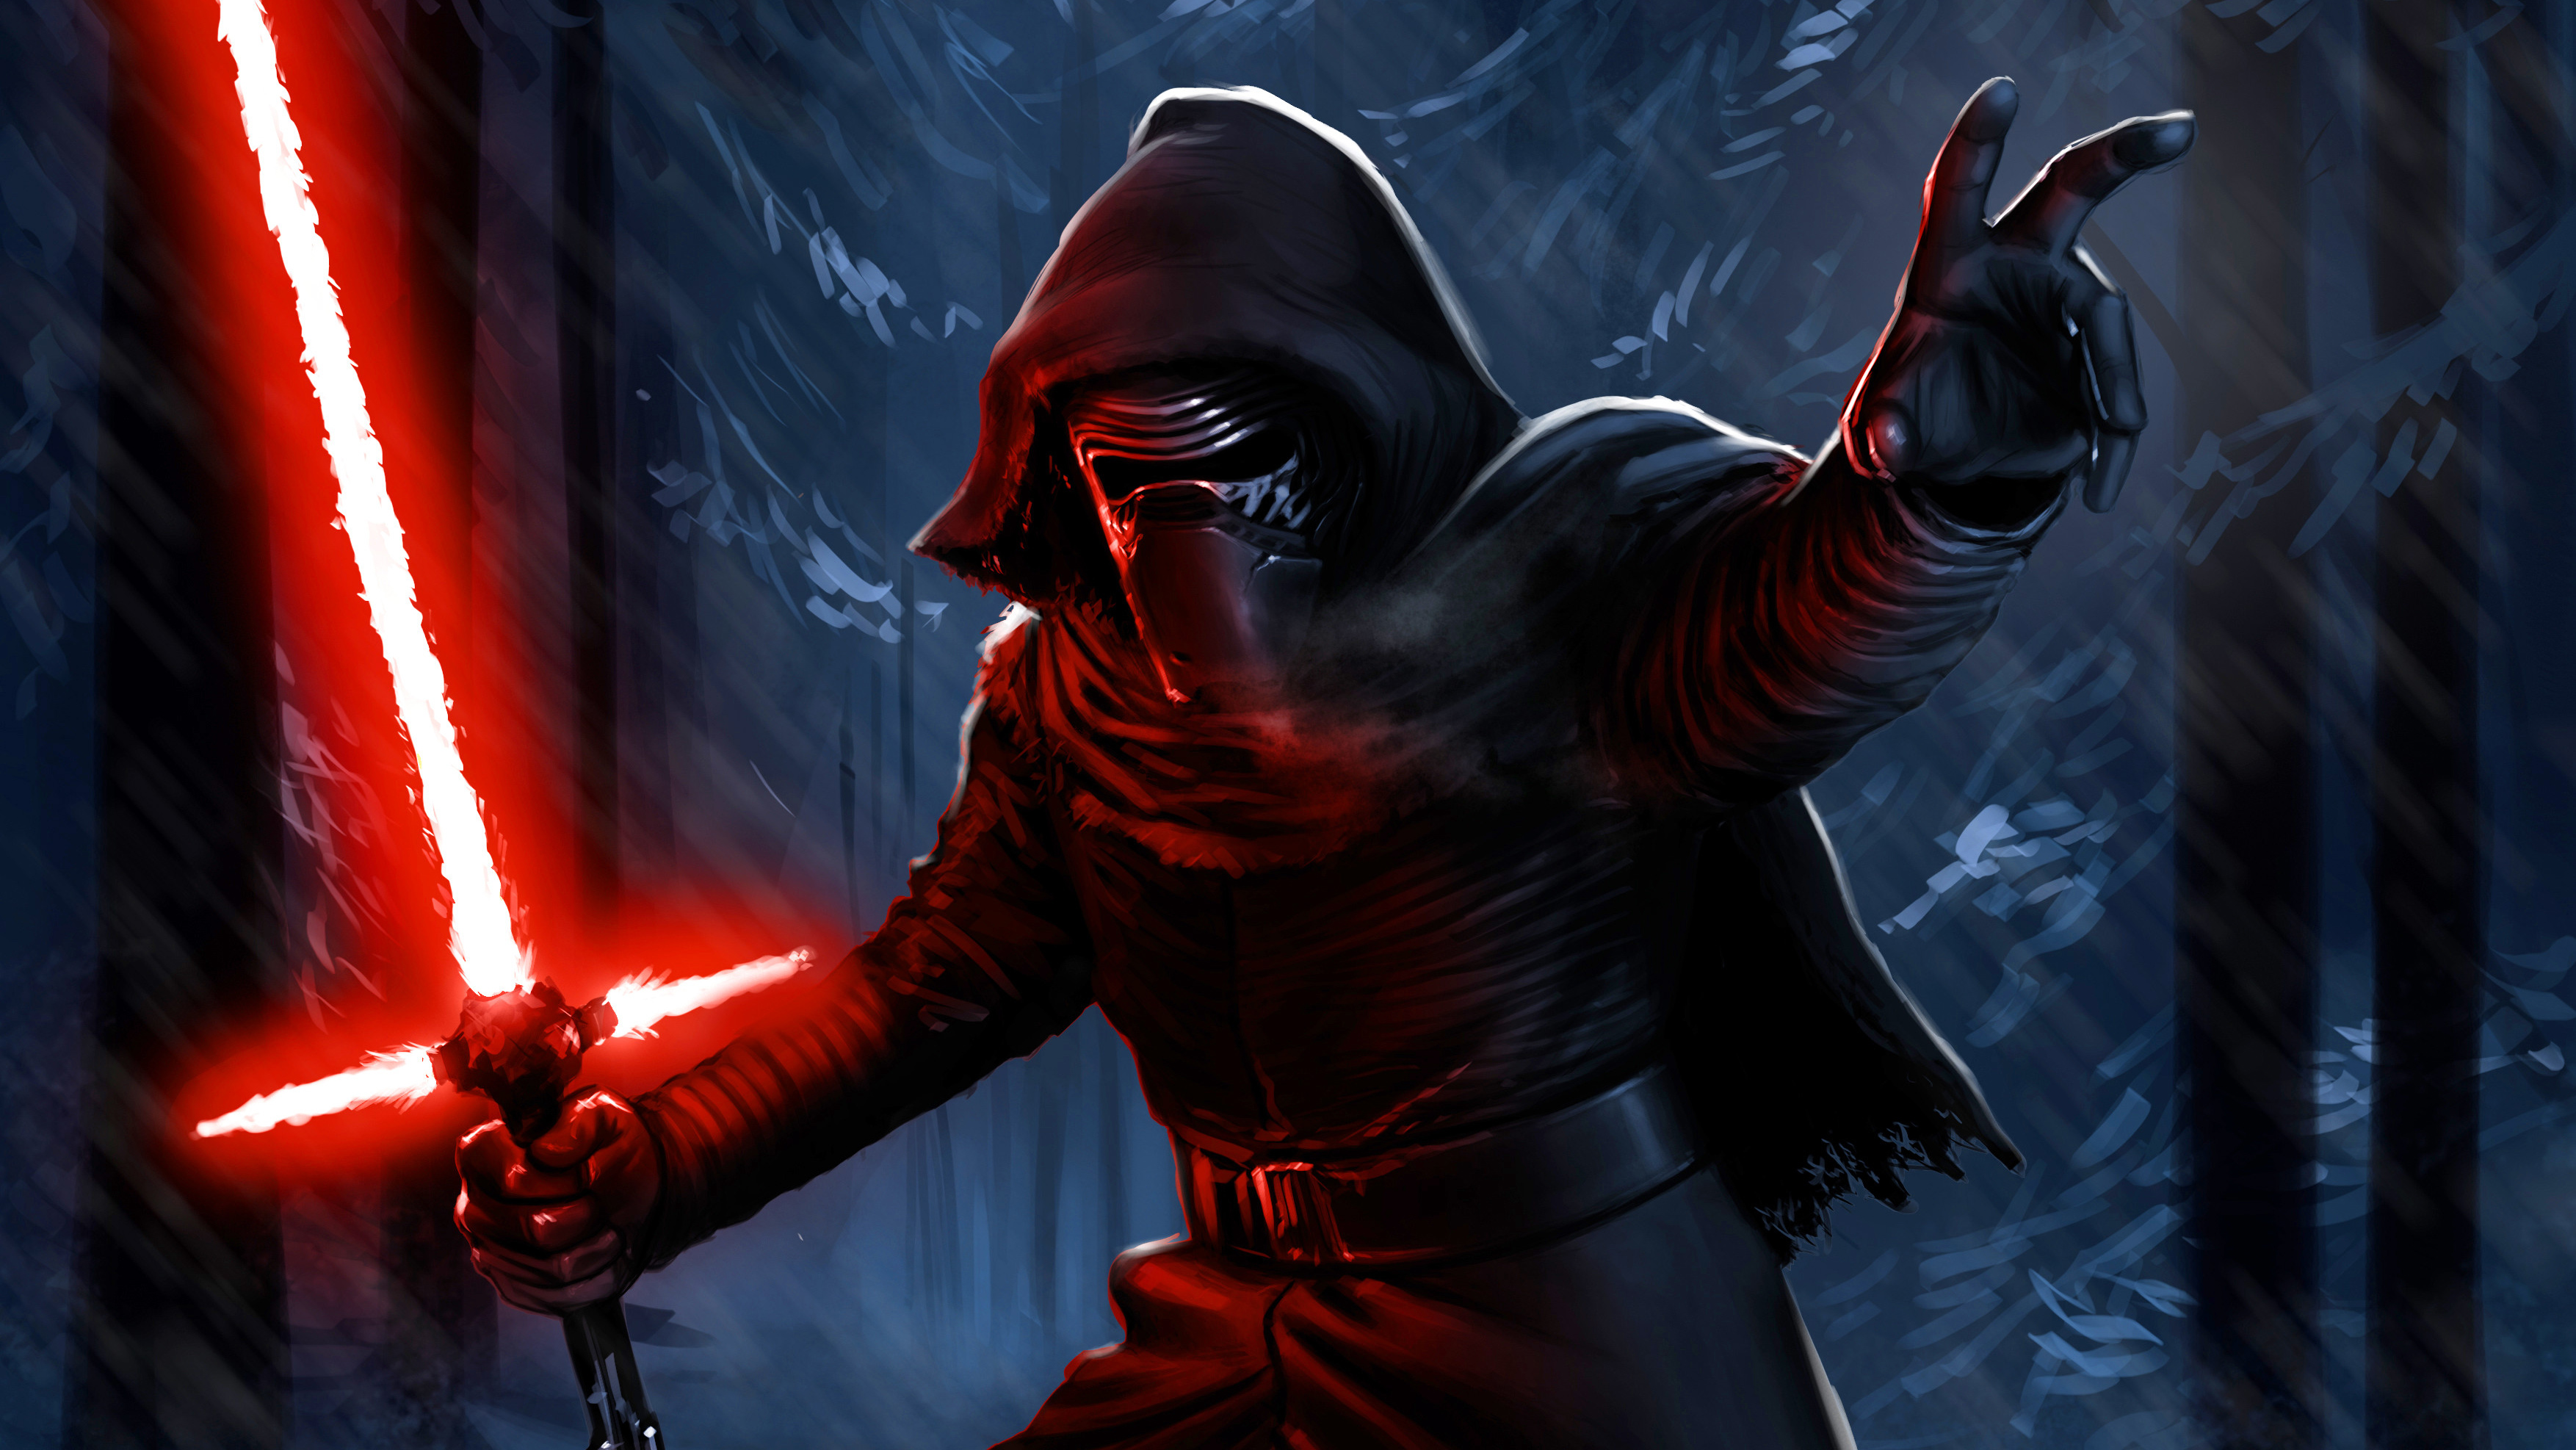 Darth Vader Lightsaber Kylo Ren Sith Star Wars 3508x1974